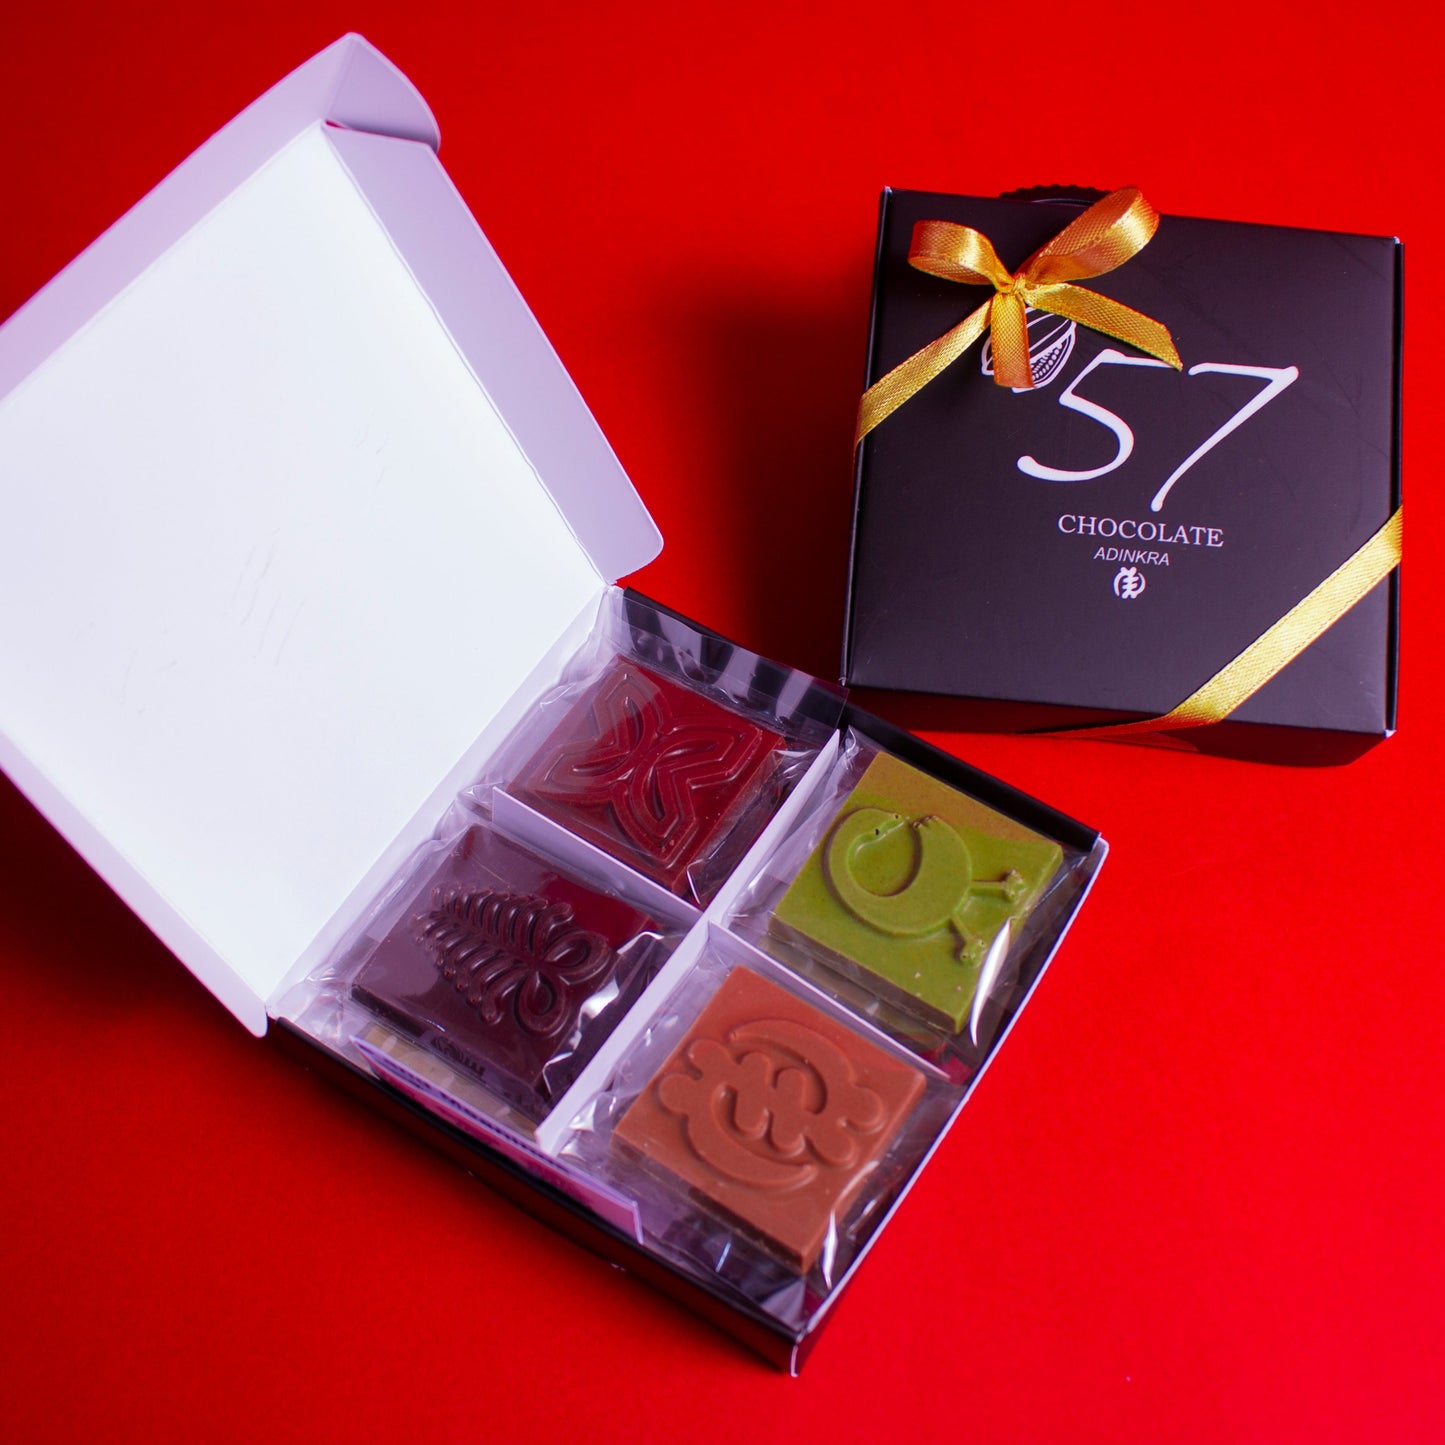 12 bite-sized adinkra chocolates made by '57 Chocolate 